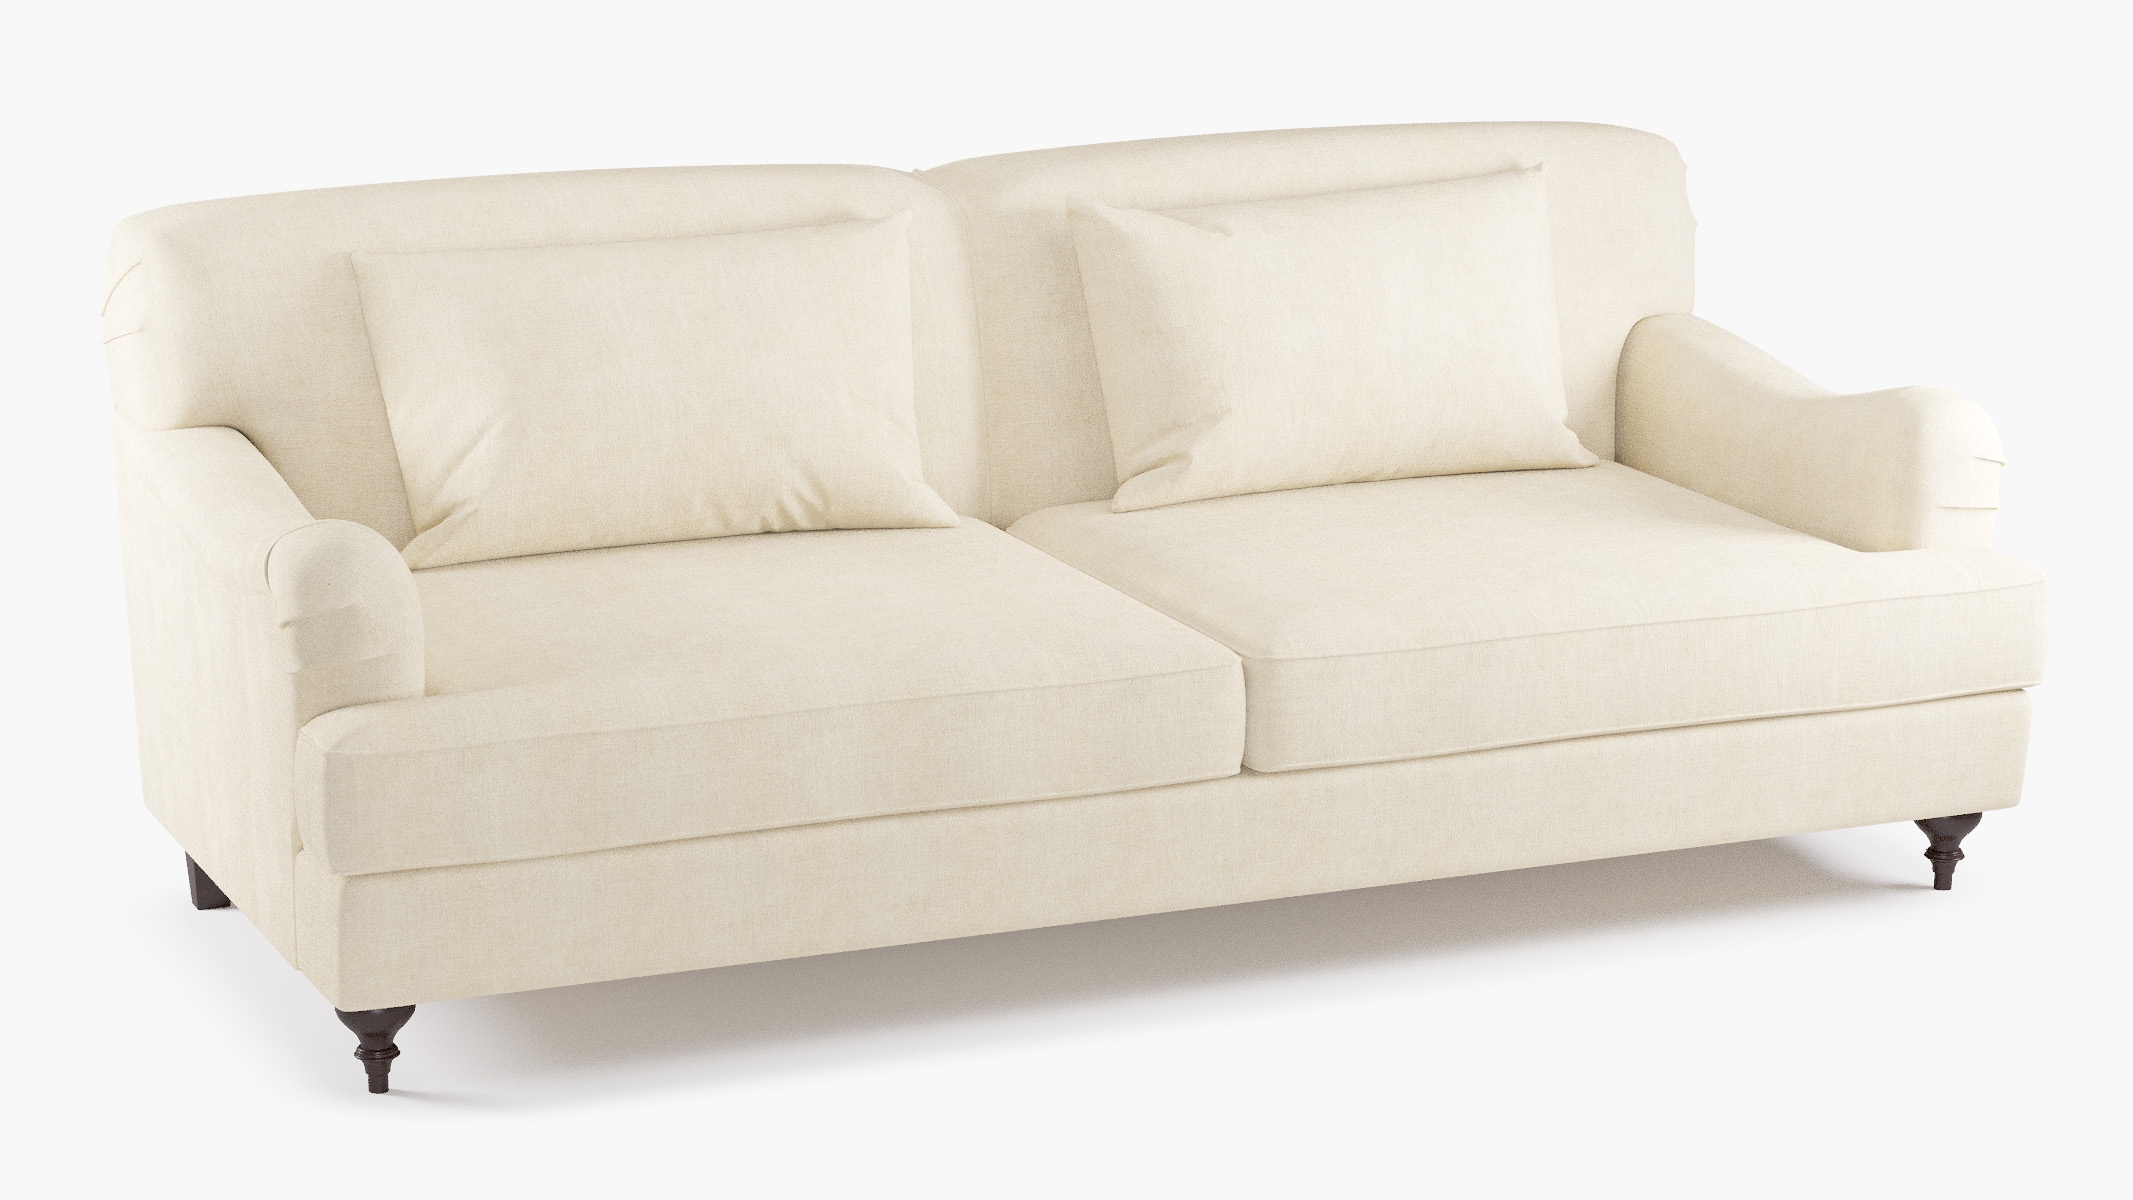 English Roll Arm Sofa, Talc Everyday Linen, Walnut - Image 1